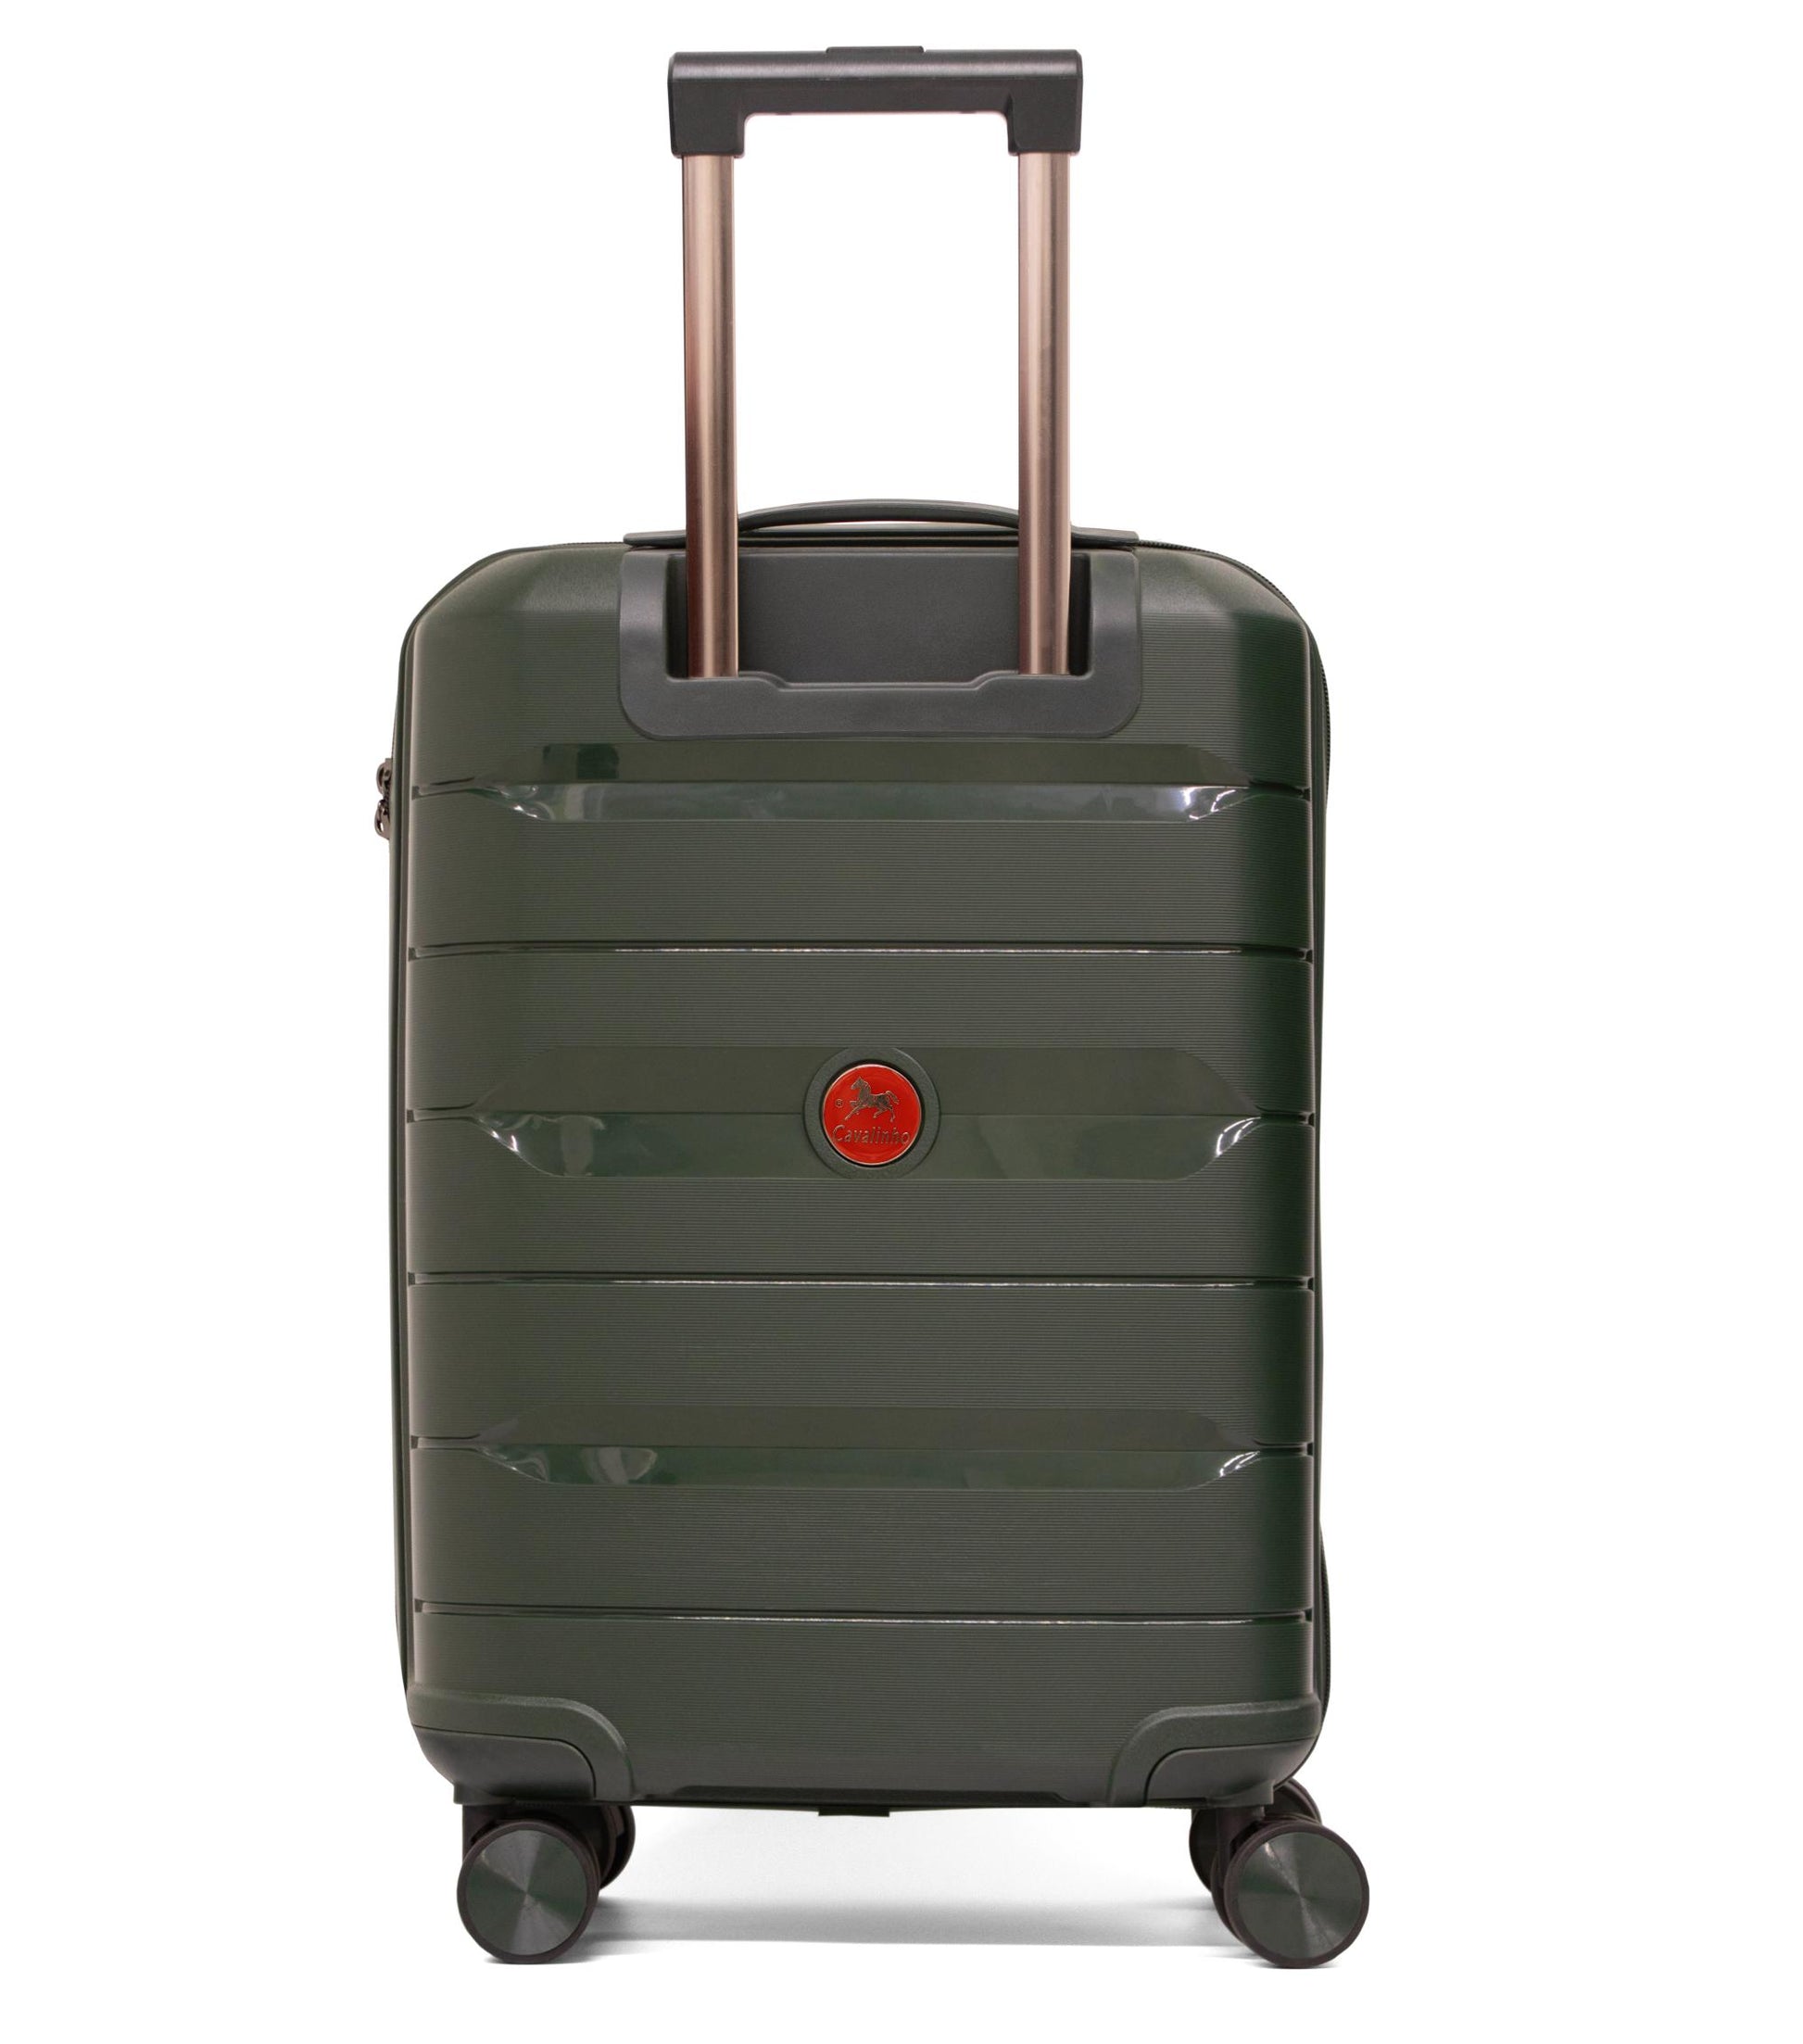 Cavalinho Oasis Carry-on Hardside Luggage (20") - 20 inch DarkOliveGreen - 68040001.09.20_3